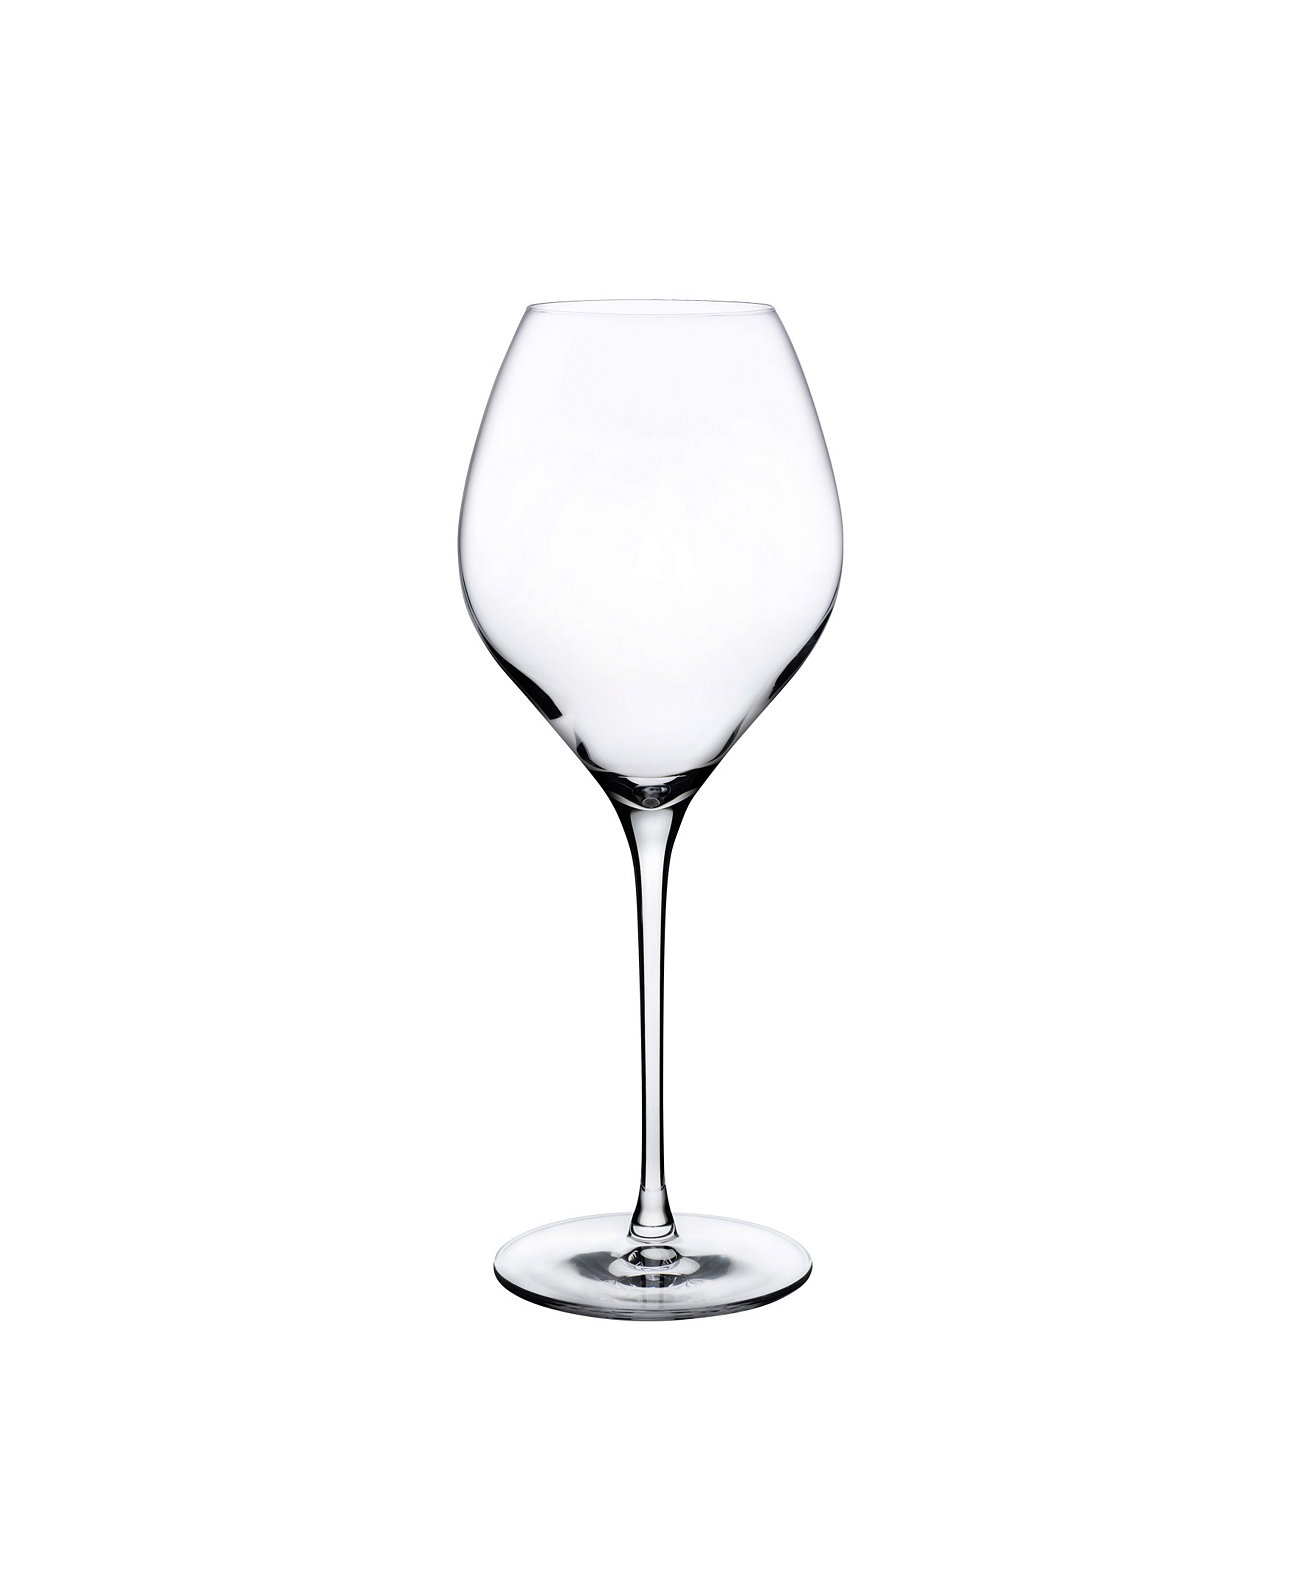 Бокал для белого вина Fantasy, 2 предмета, 26 унций Nude Glass